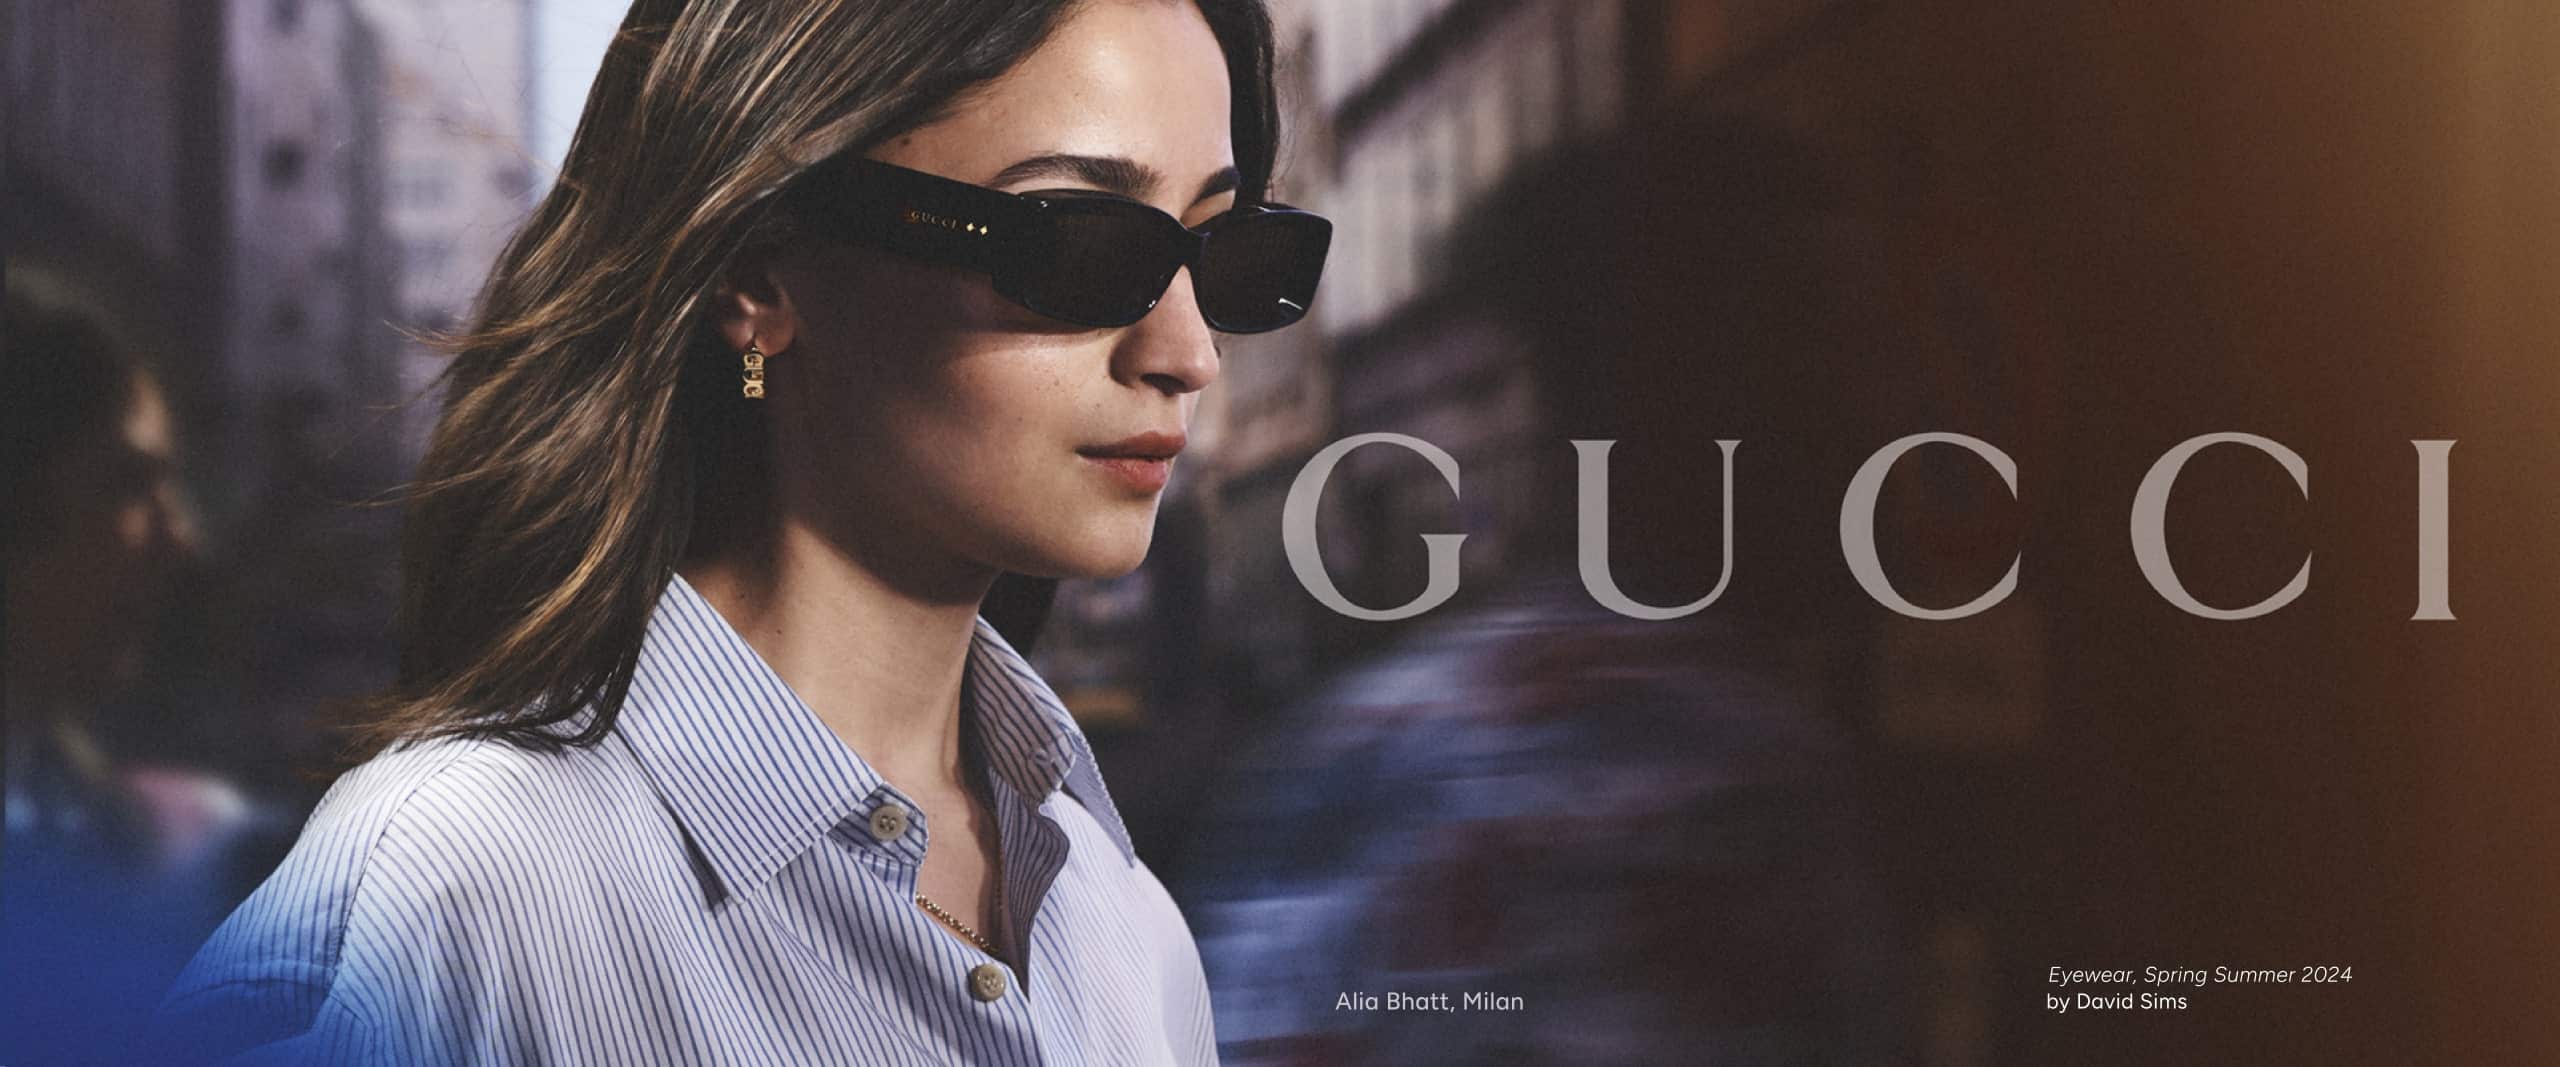 Gucci Sunglasses 1 Collection Image